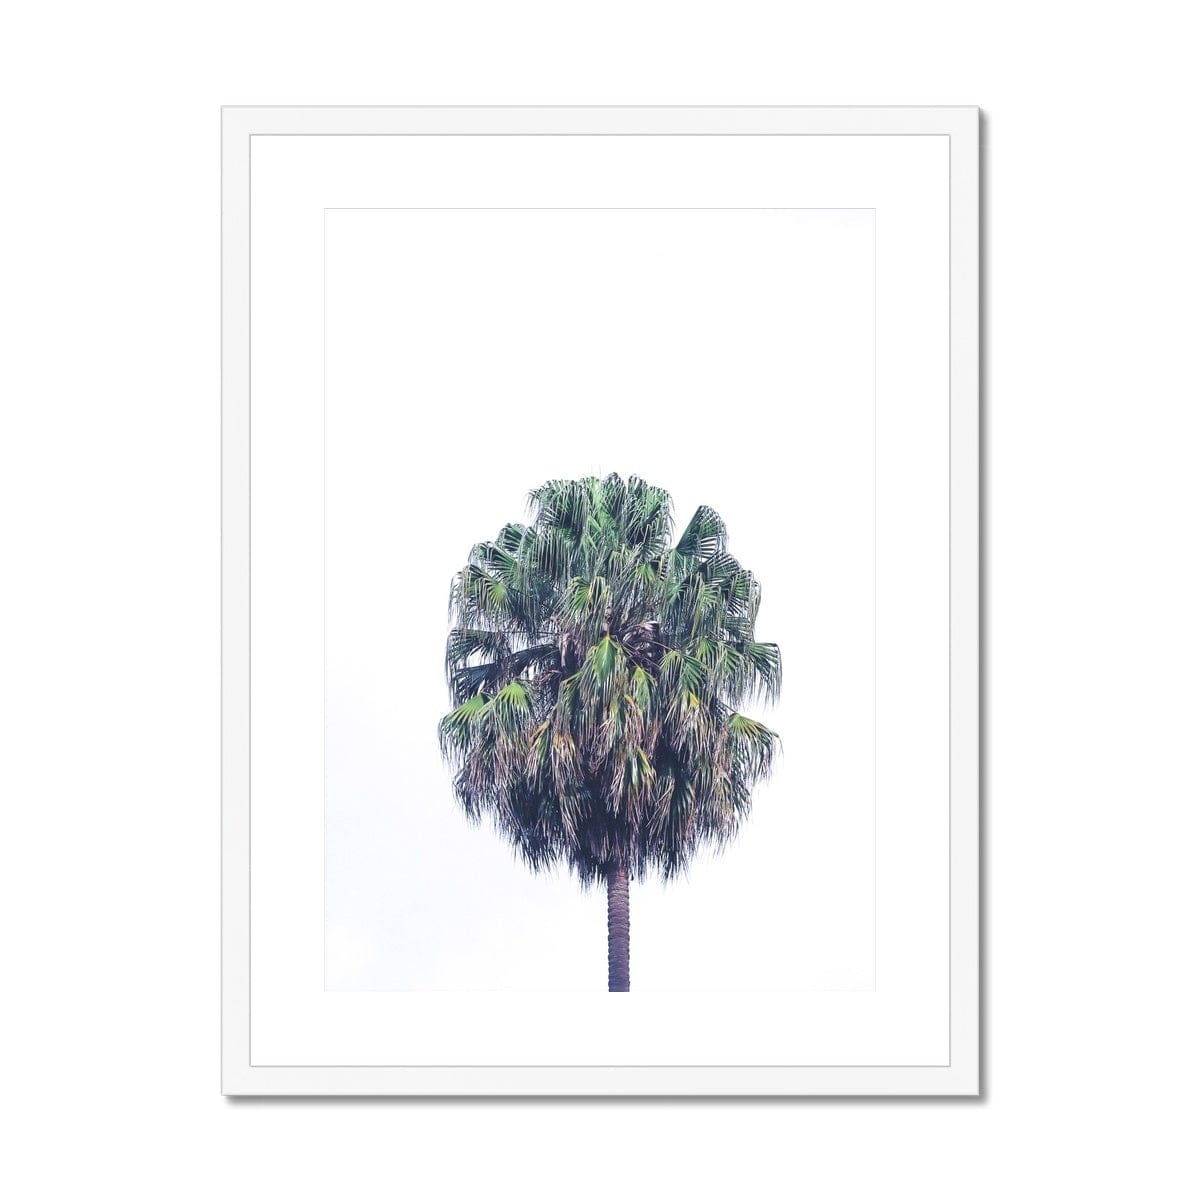 Adam Davies Framed A4 Portrait (21x29.7cm) / White Frame Vaucluse Palm Tree V2 Framed & Mounted Print